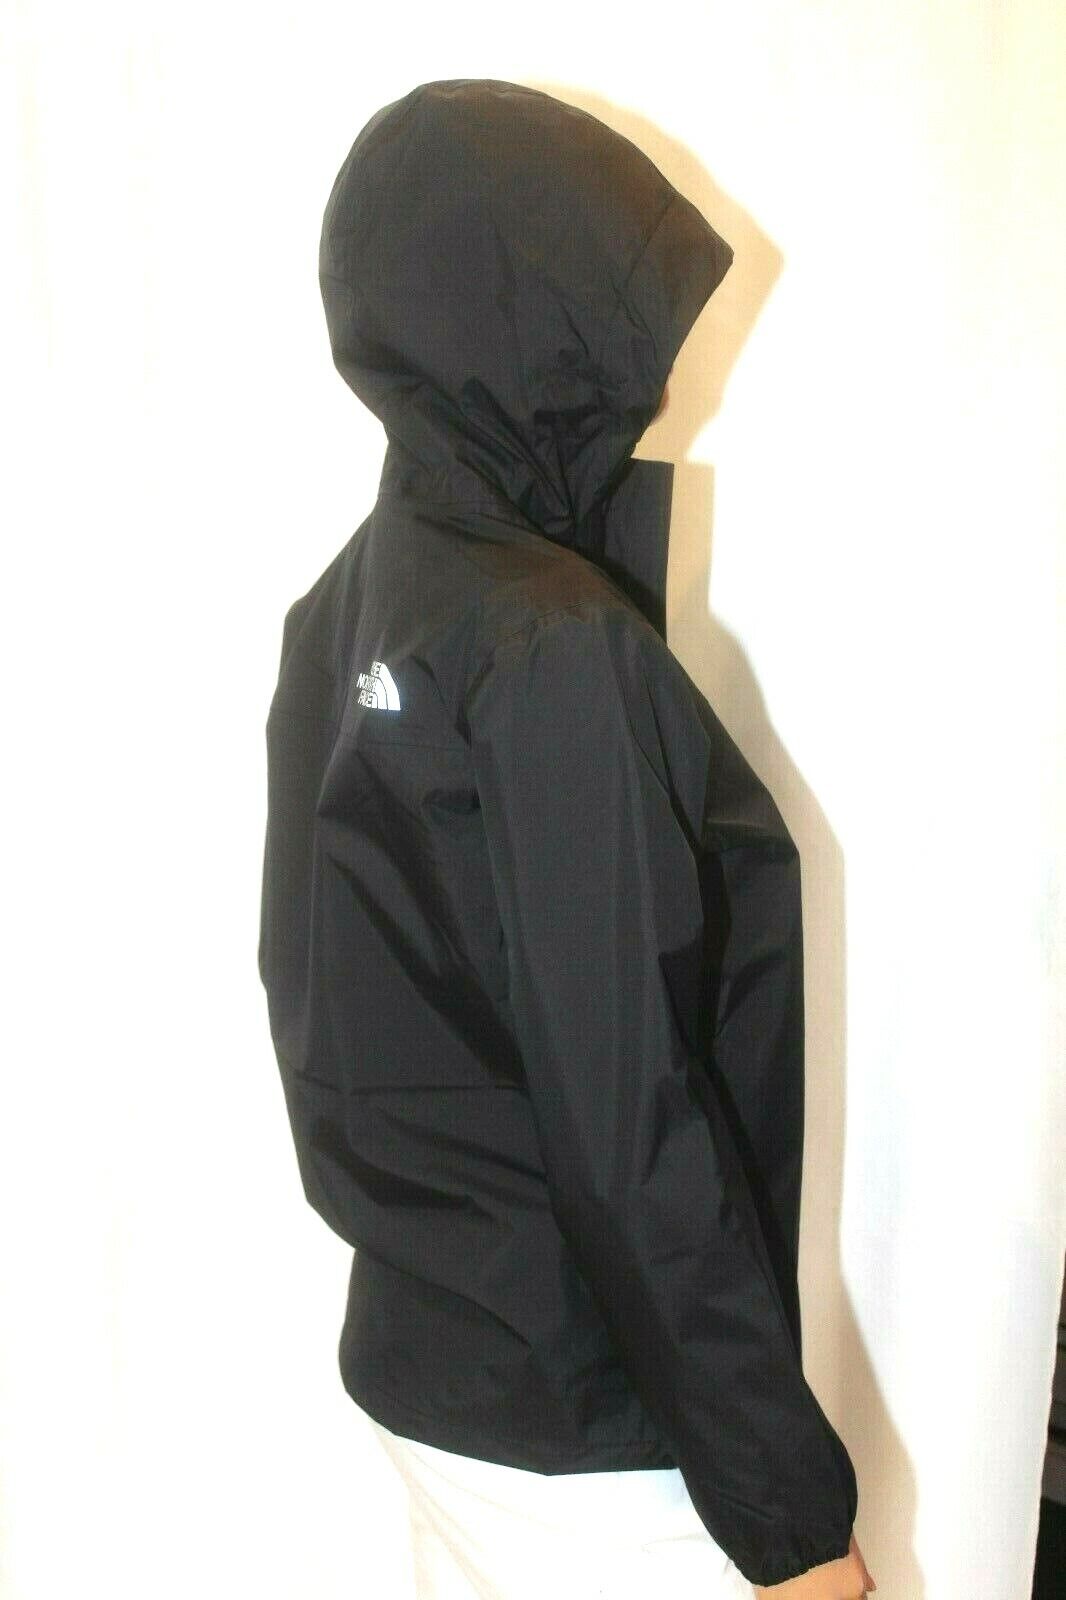 *NWT* $70. North Face Resolve Reflective Girls Black Rain Jacket HyVent Hood SM